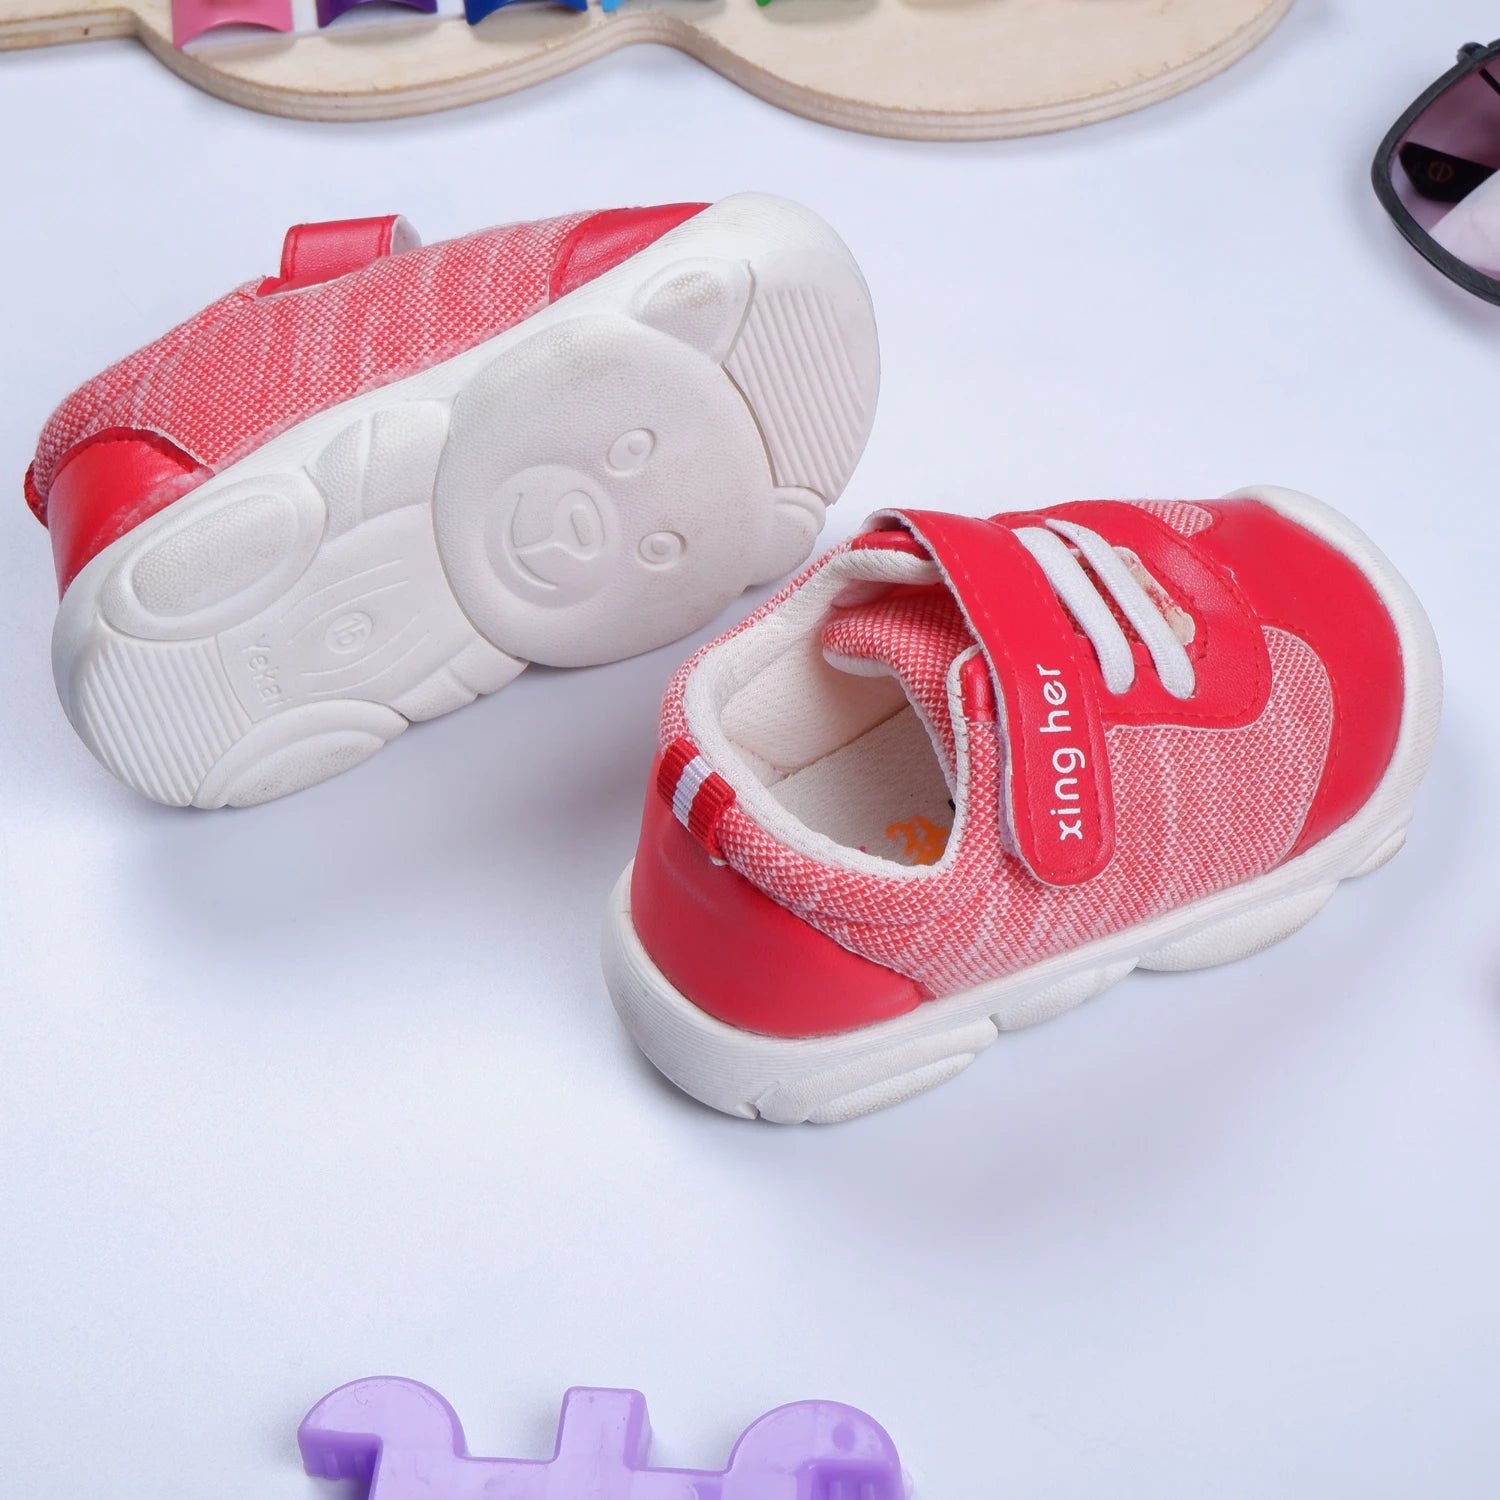 Footwear for Little Ones: Newborn Baby Shoes - Unisex